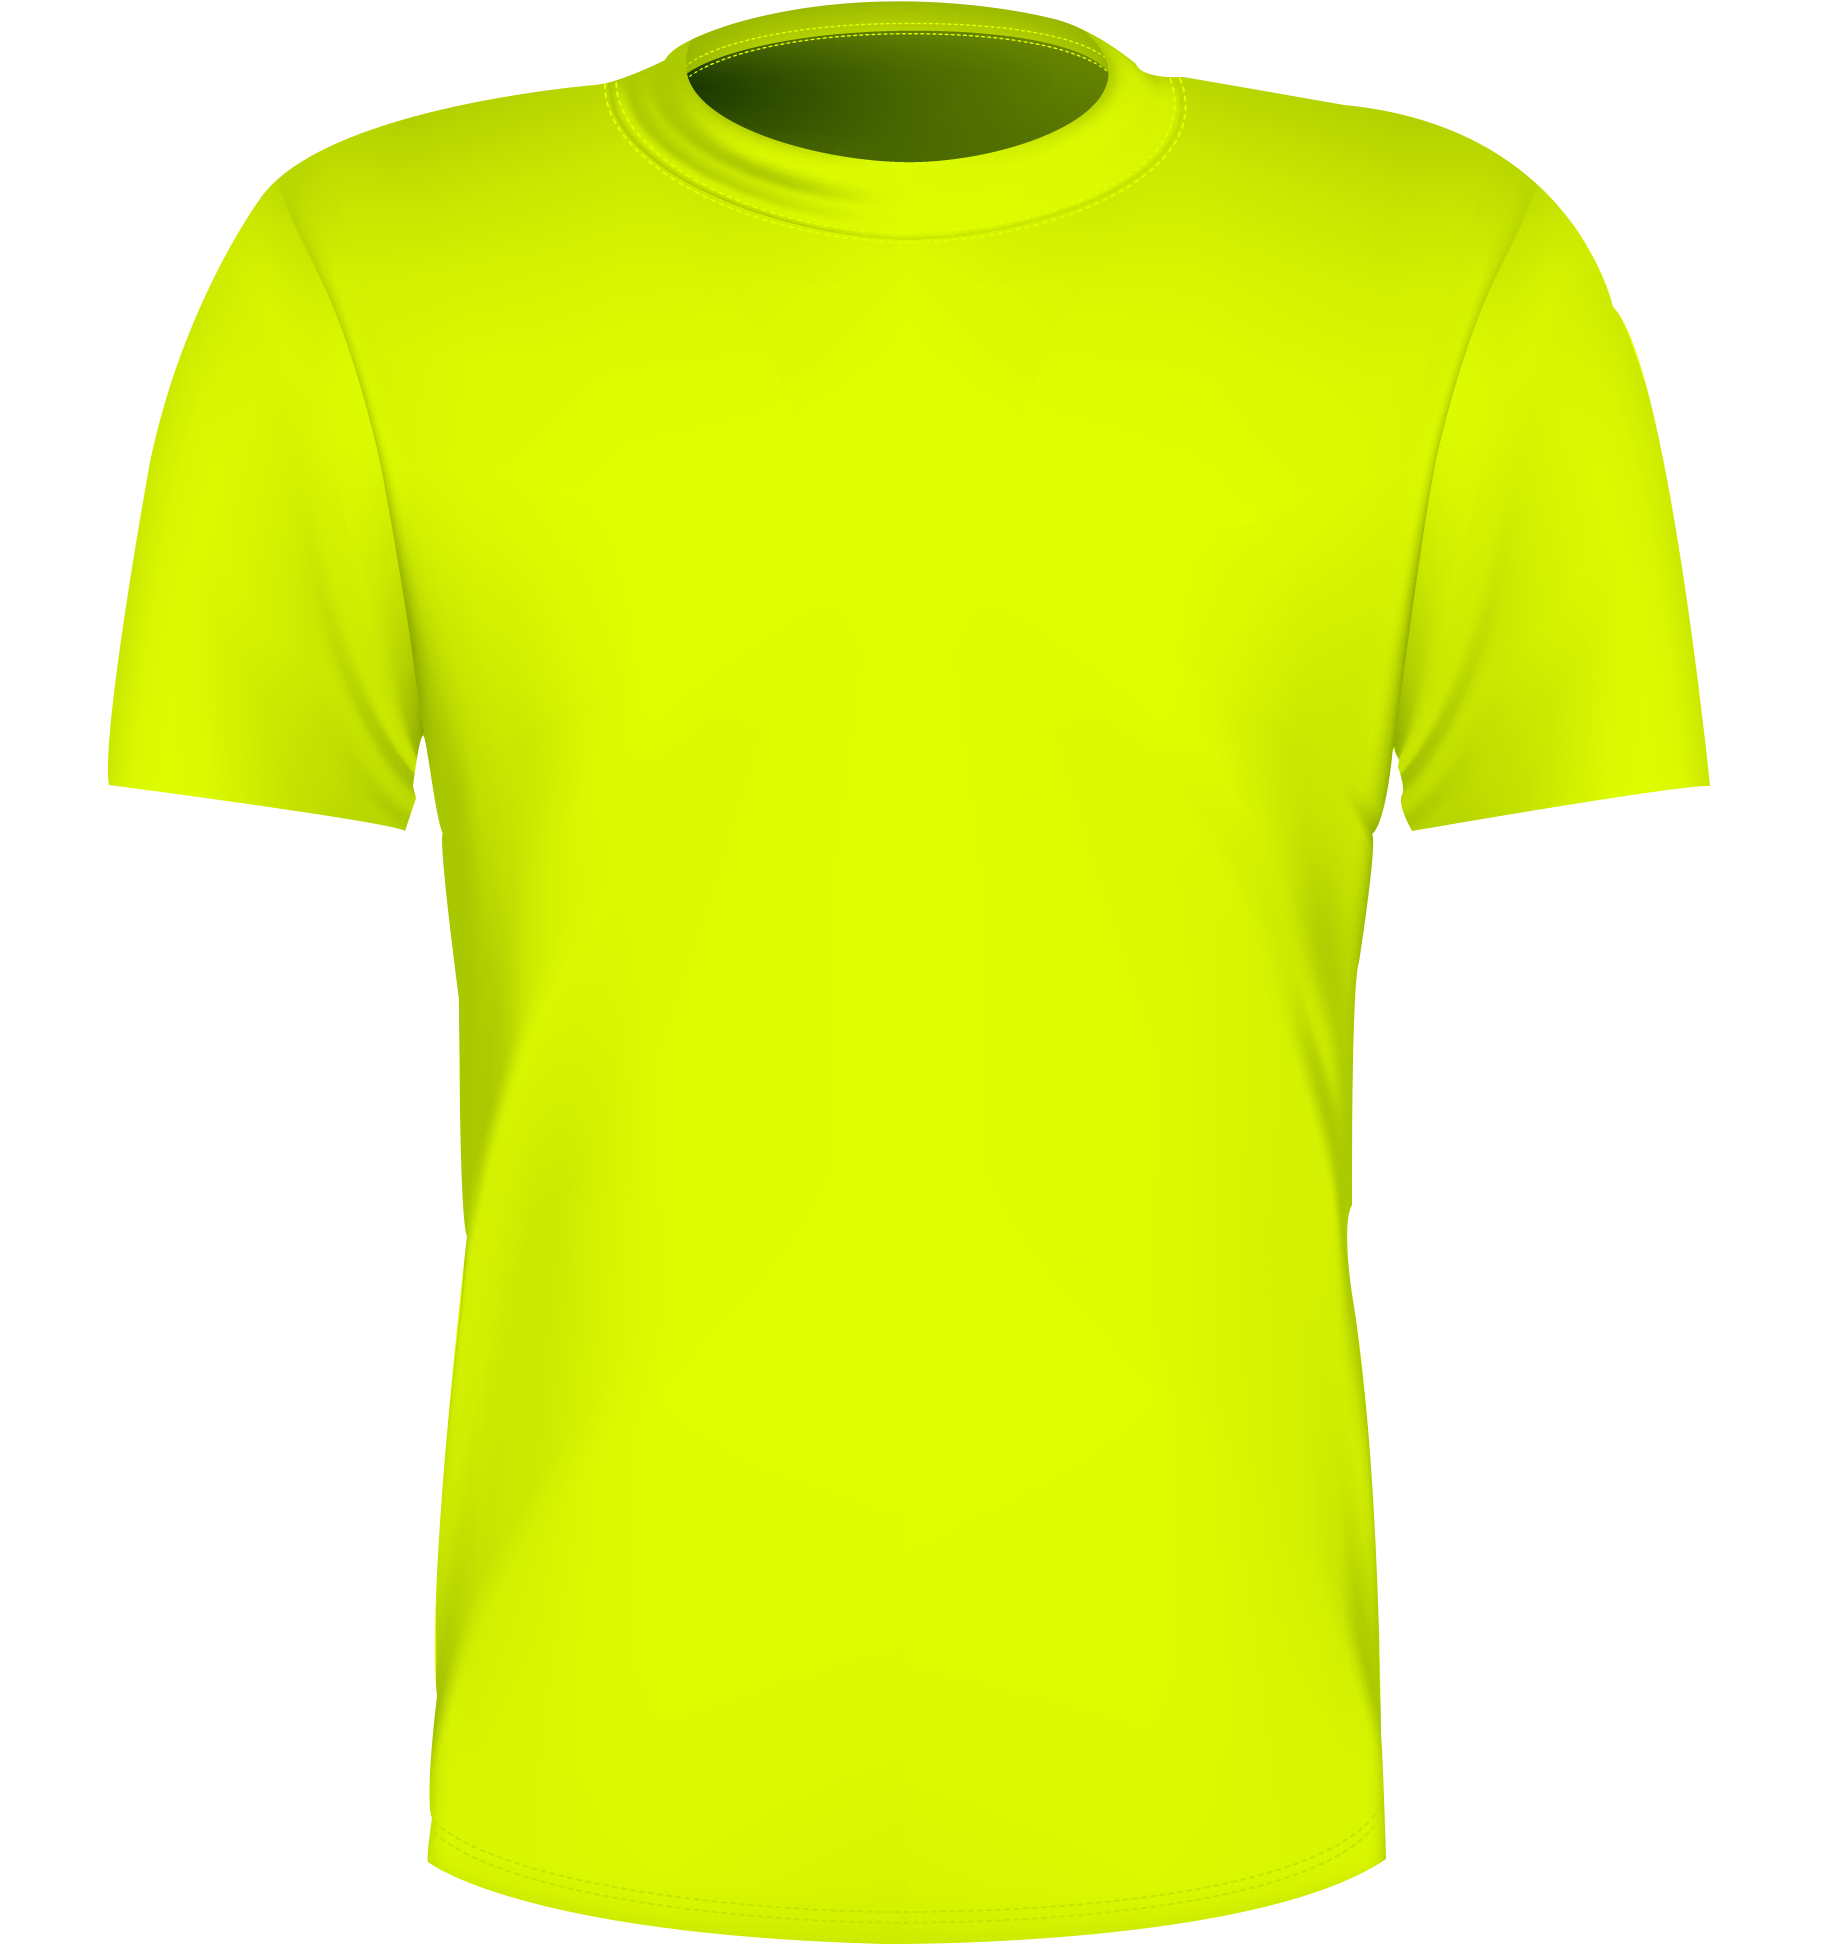 Coloured House T-shirt / Grays Blackburn